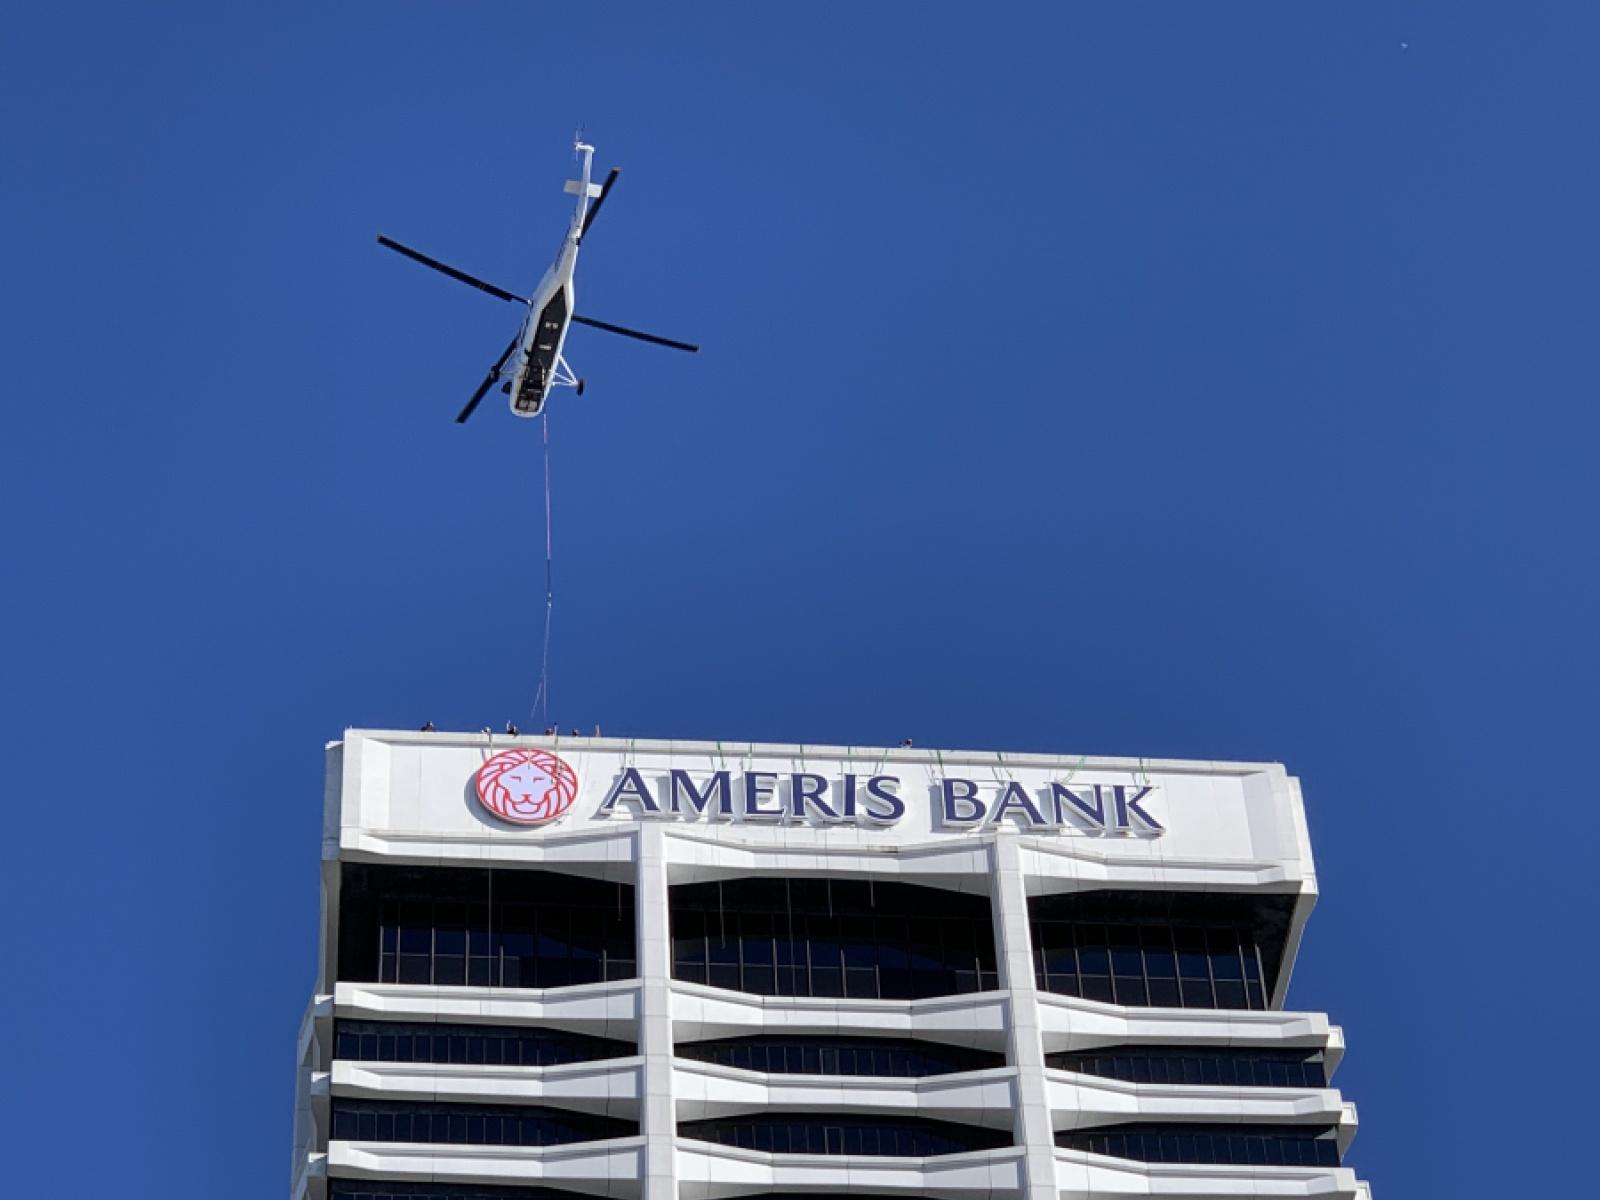 Ameris Banks corporate signage